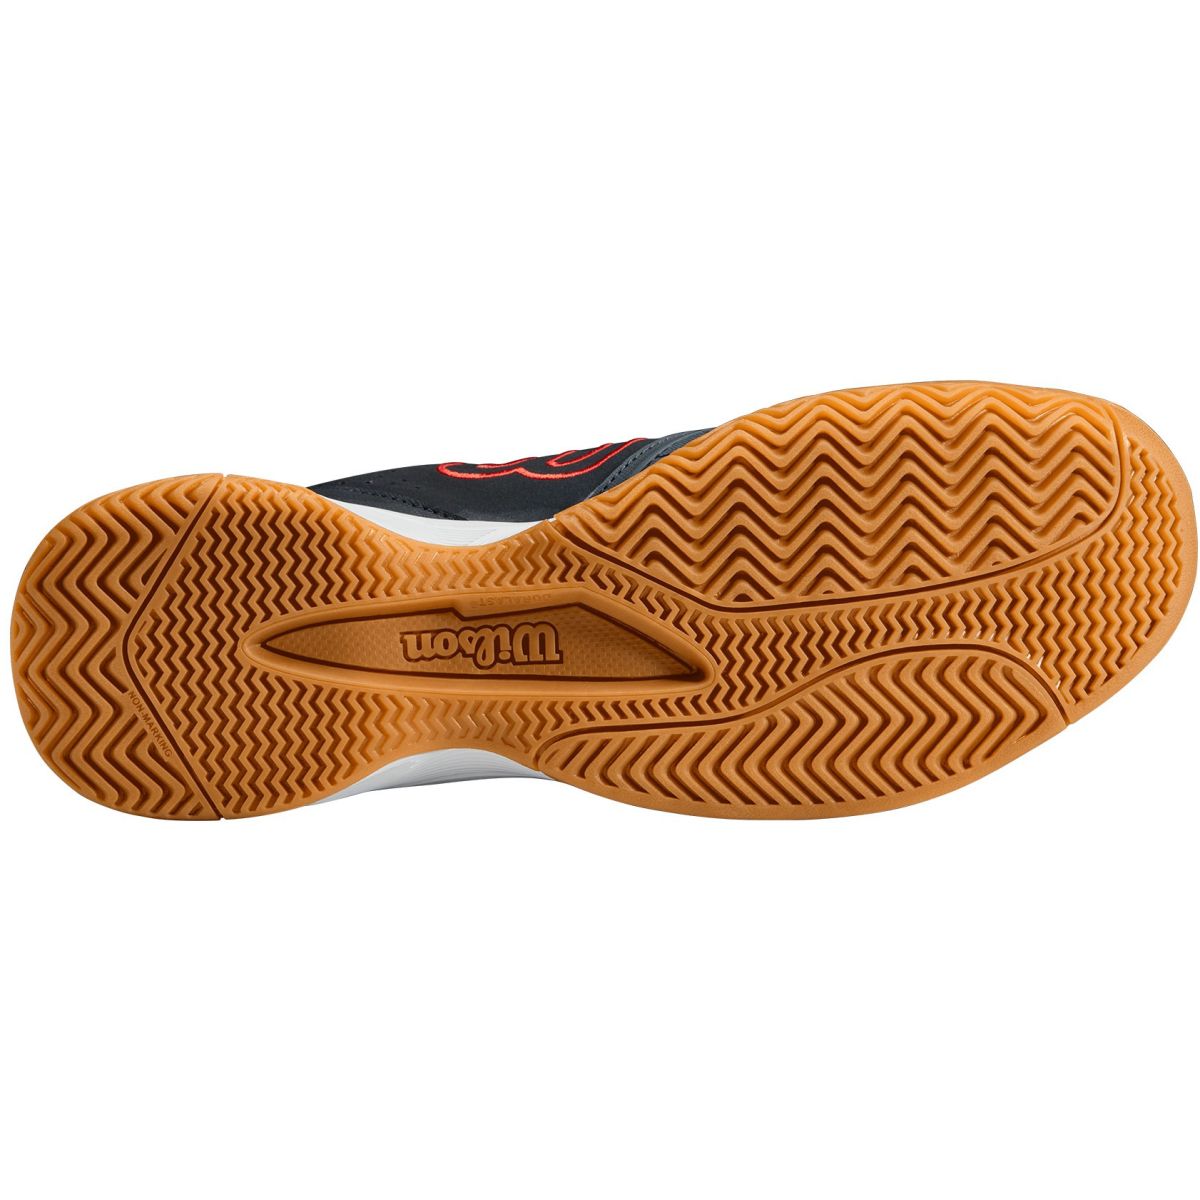 Wilson Kaos Devo Men's Tennis Shoes WRS325070